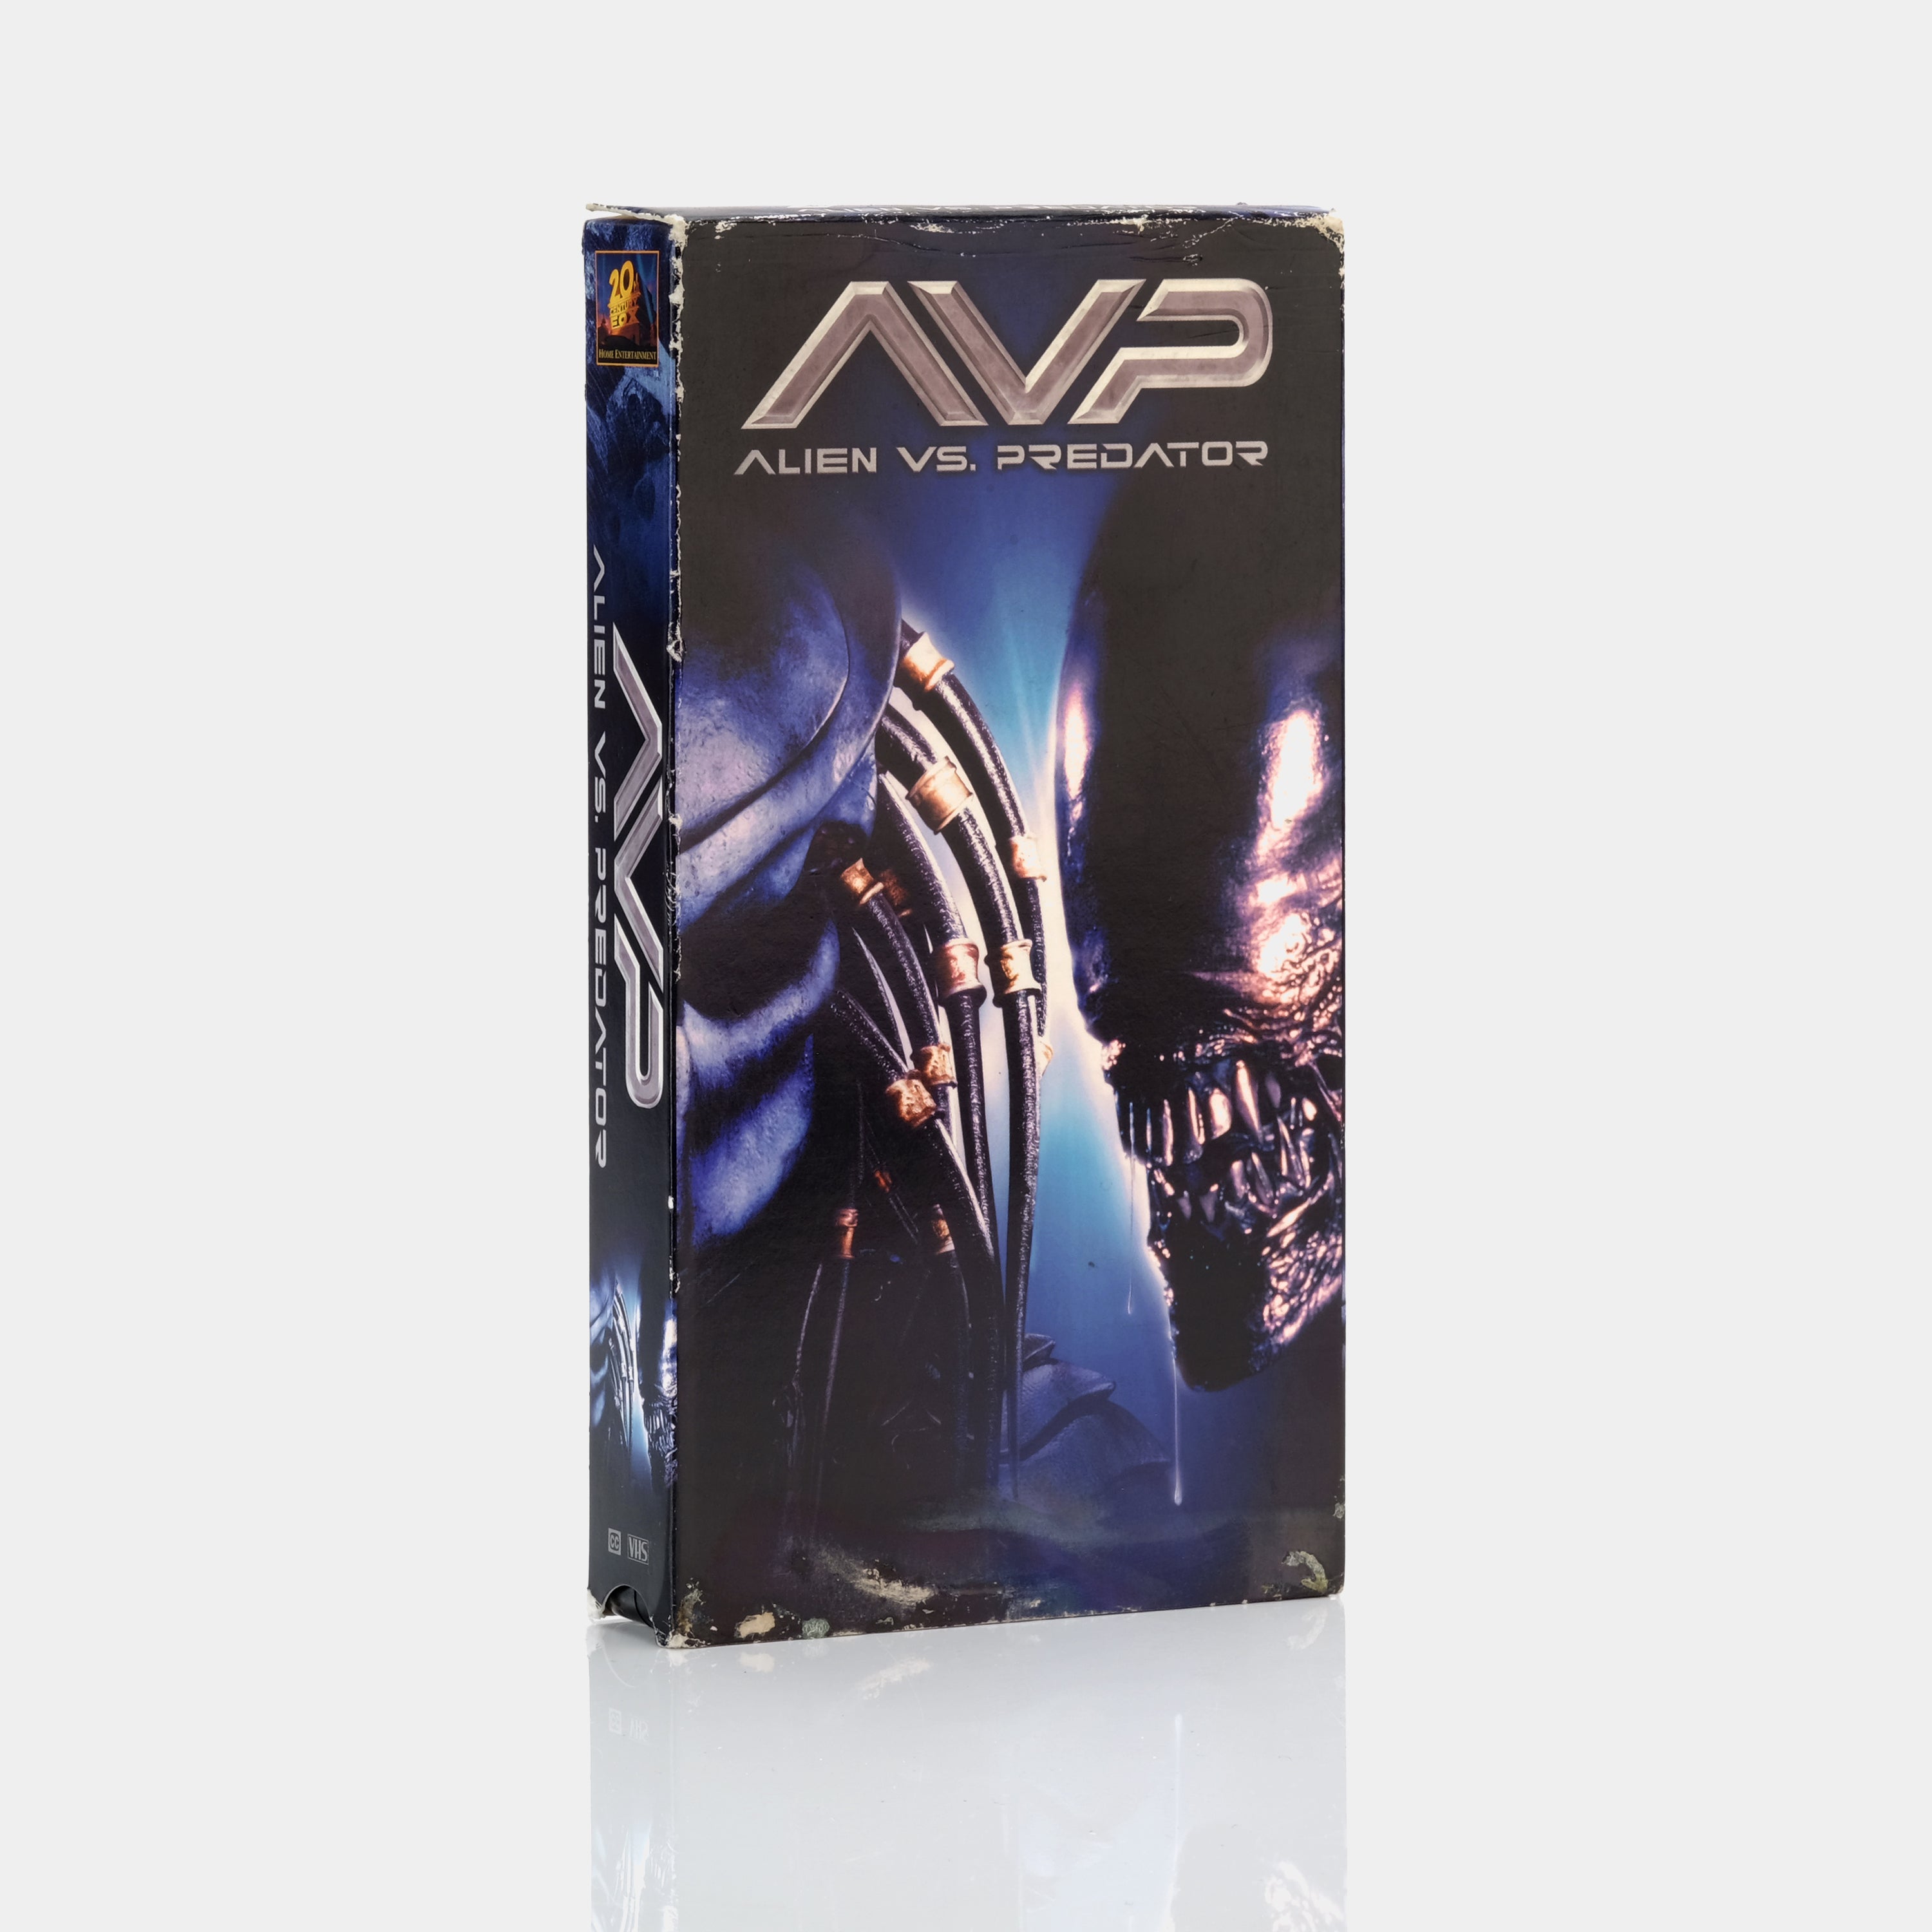 Alien vs. Predator VHS Tape